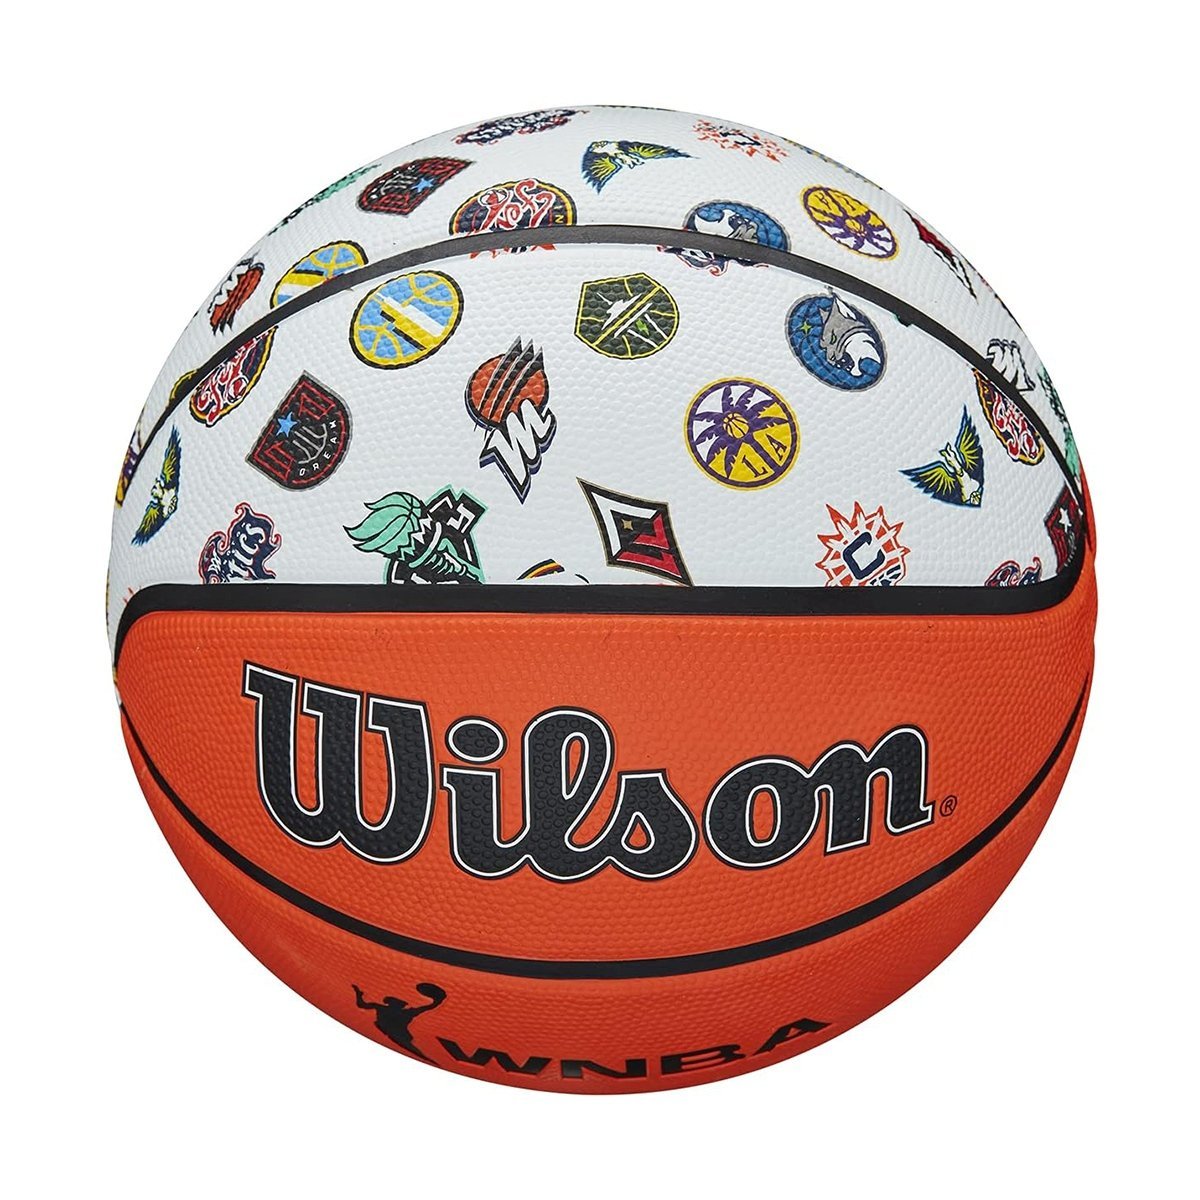 Lopta Wilson WNBA All Team Bskt - biela